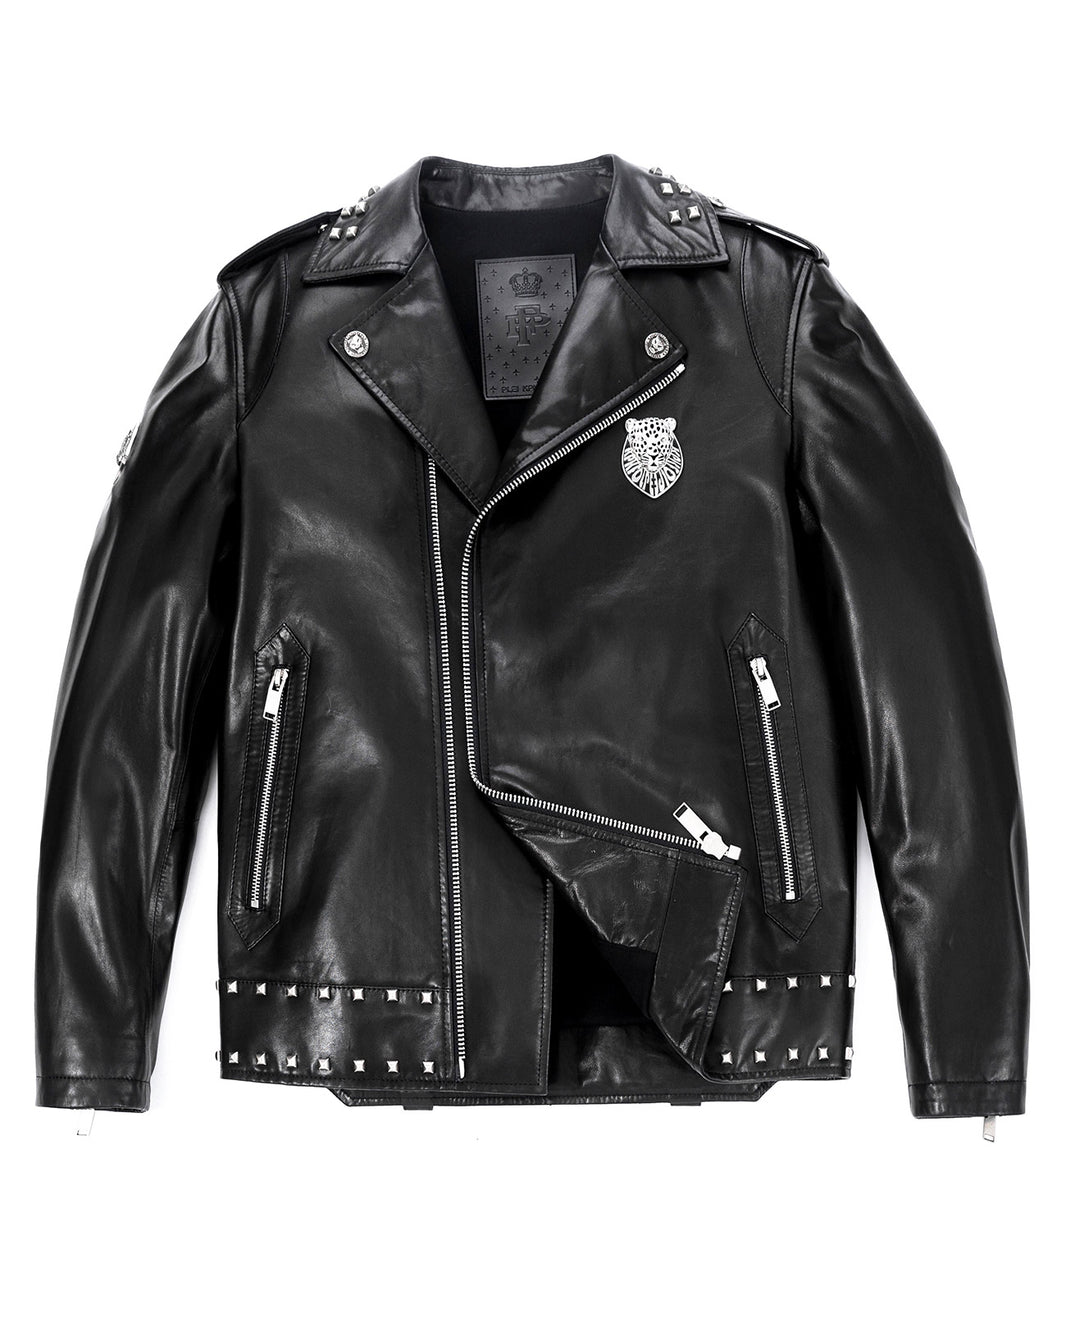 Moto Jackets - Men's Leather Biker Jacket | Black, Brown & White